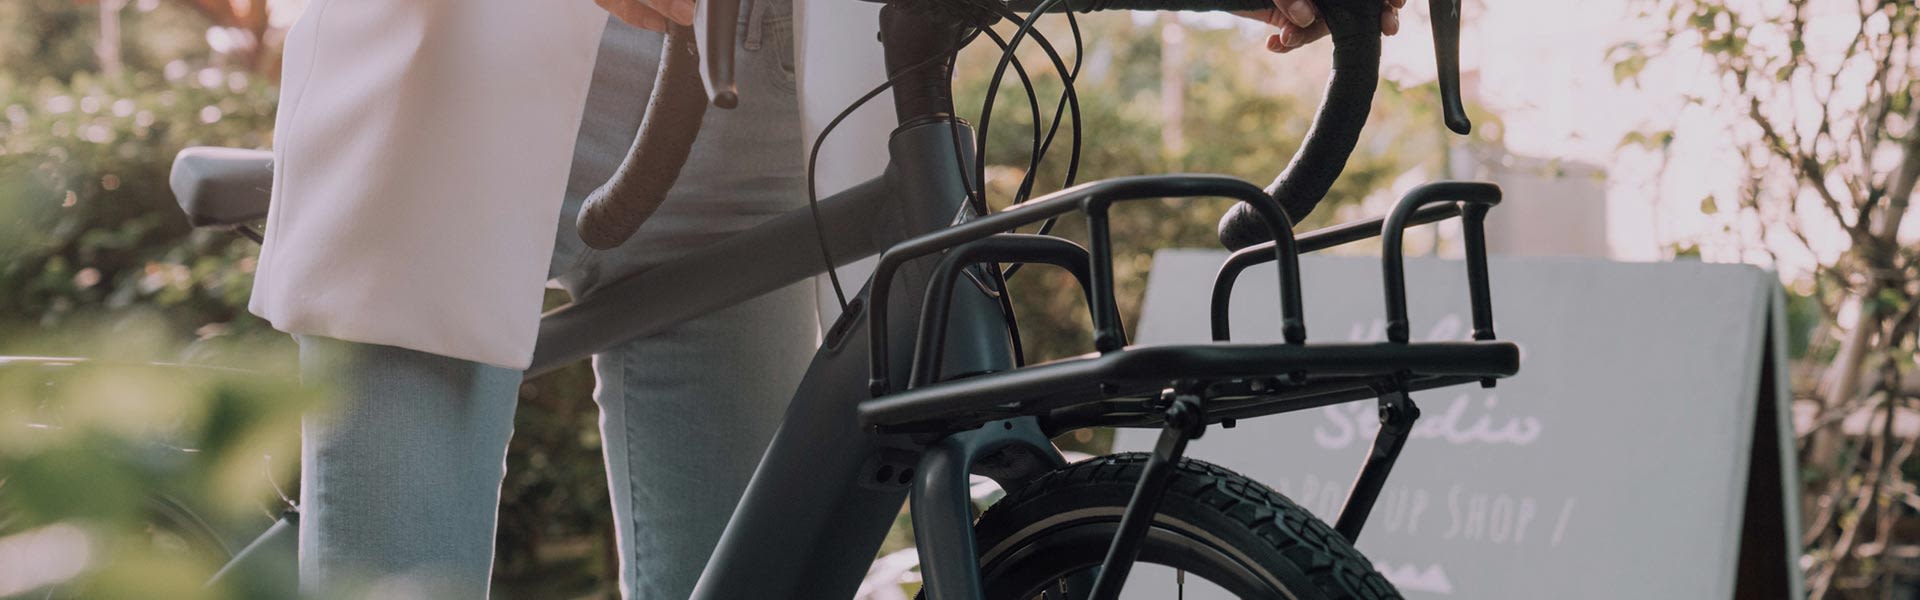 Electric Bike Accessories | Momentum Bikes US